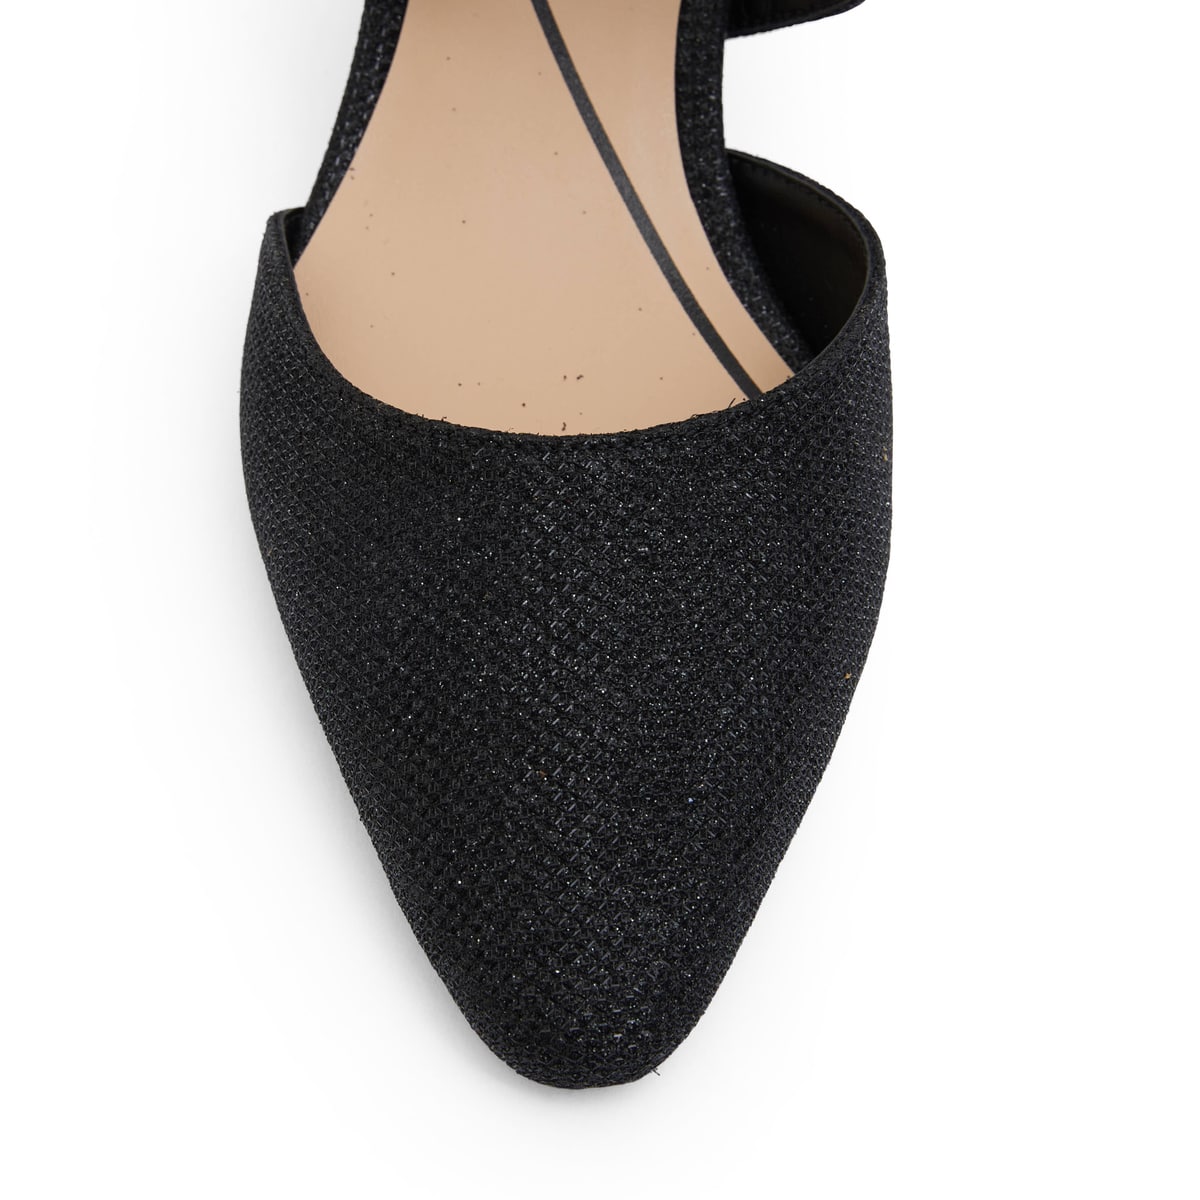 Adison Heel in Black Shimmer Fabric